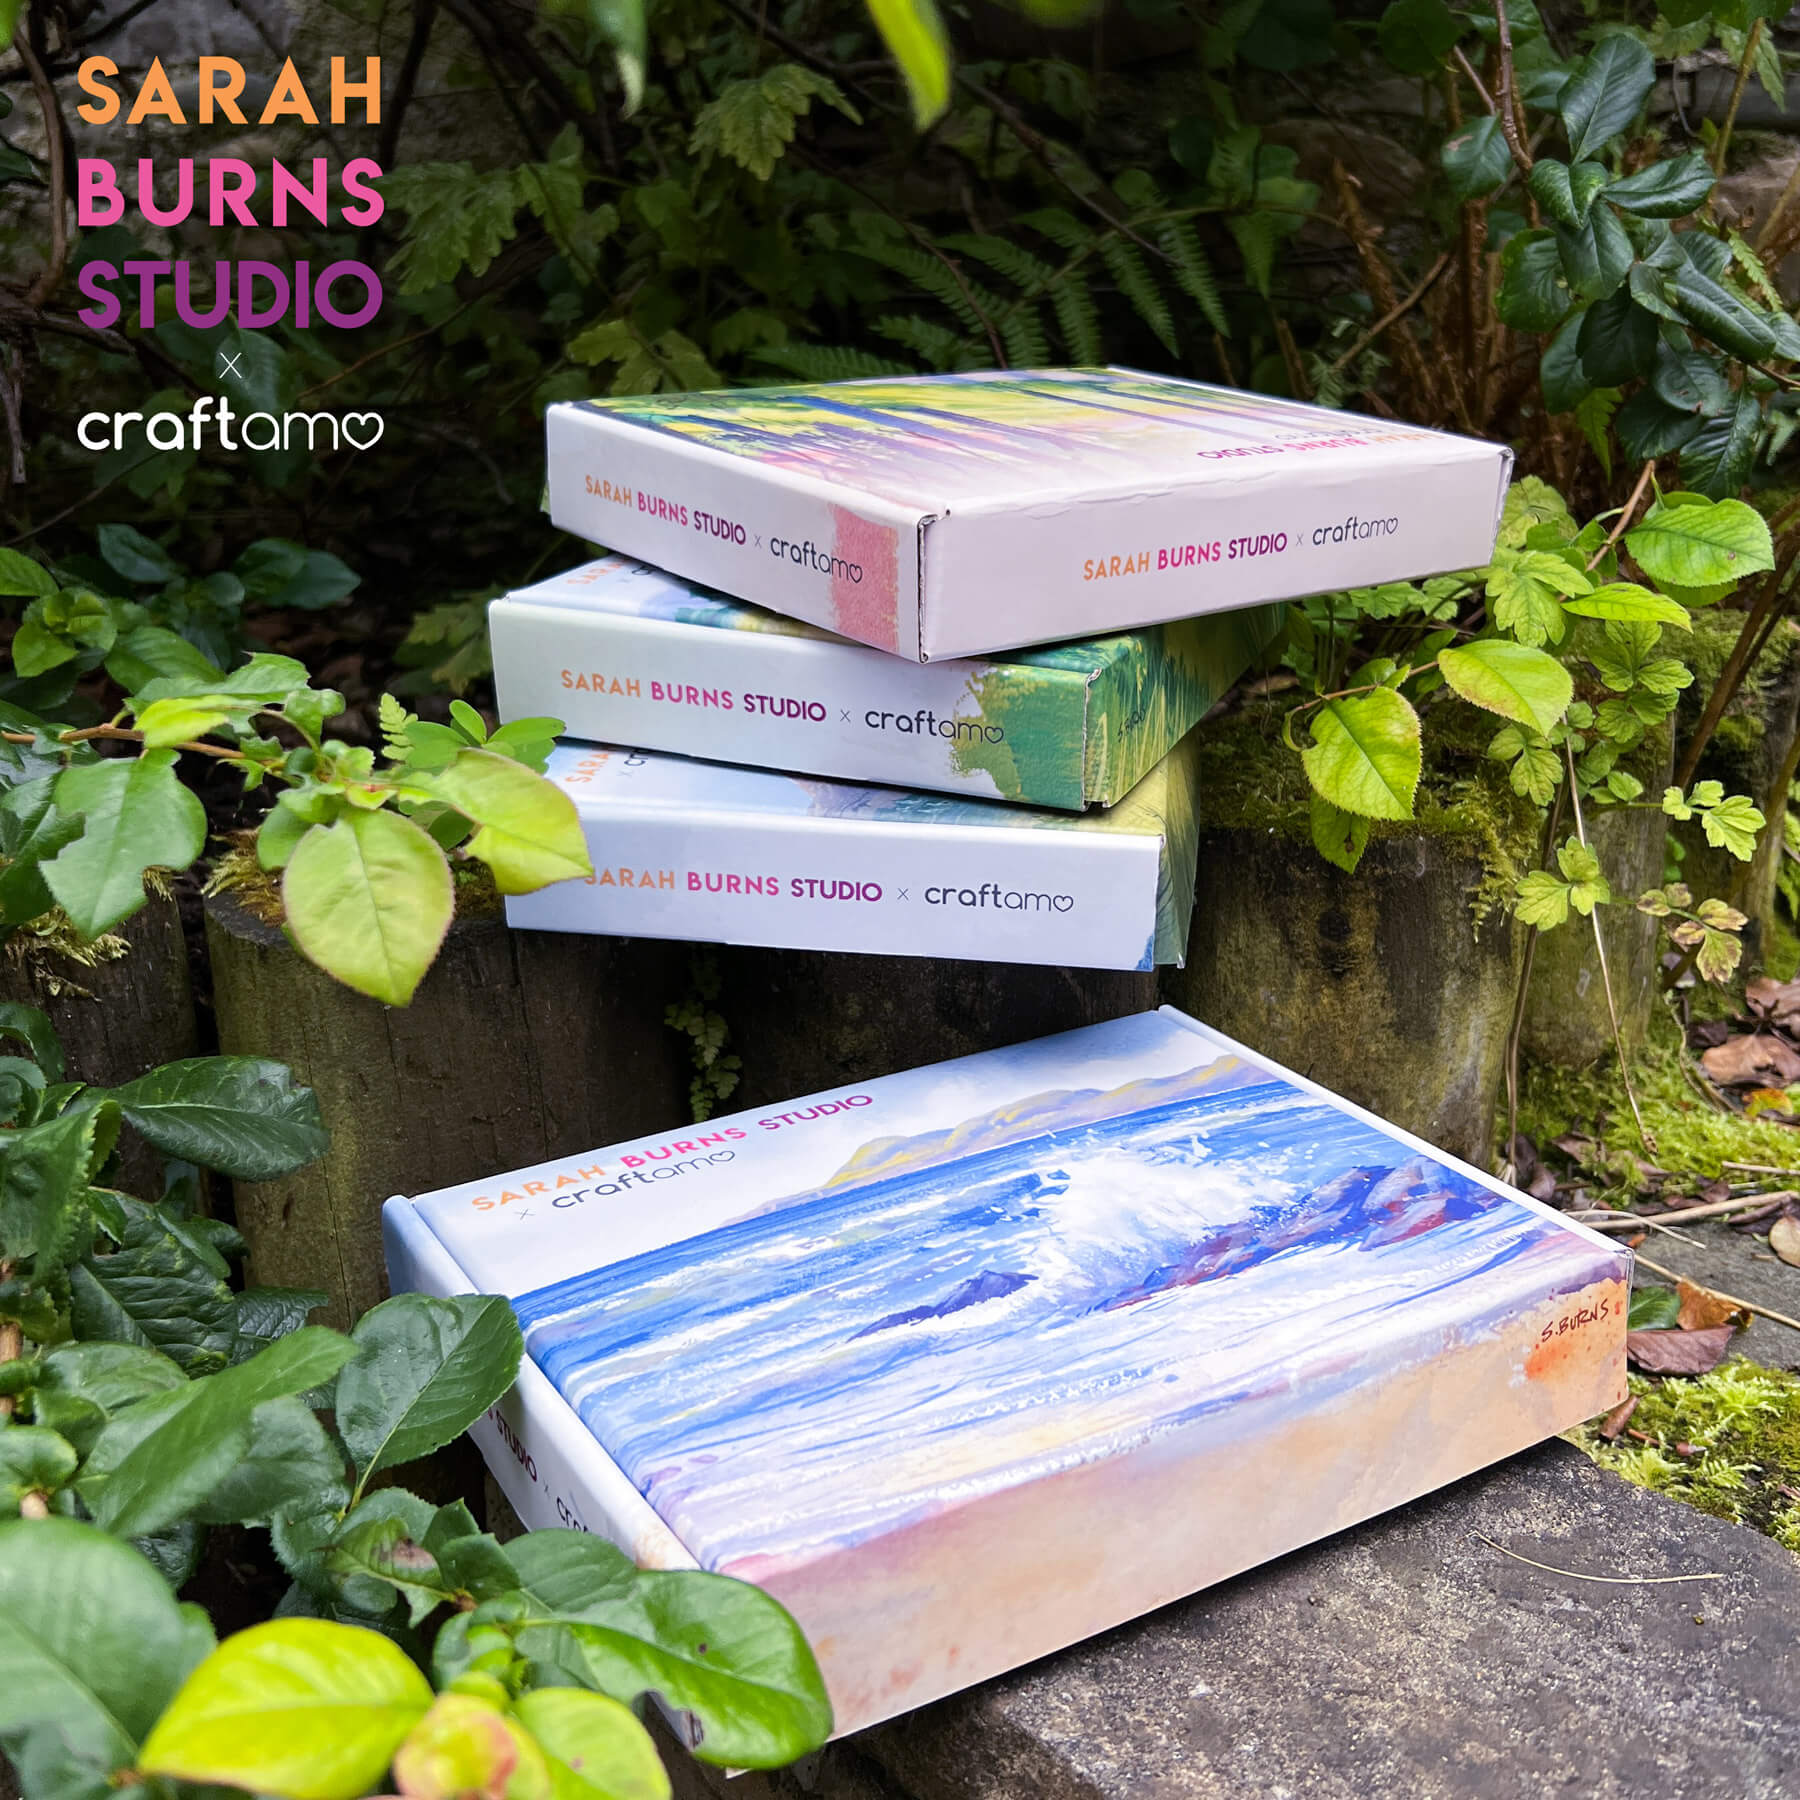 Sarah Burns Studio X Craftamo Gouache Subscription Box